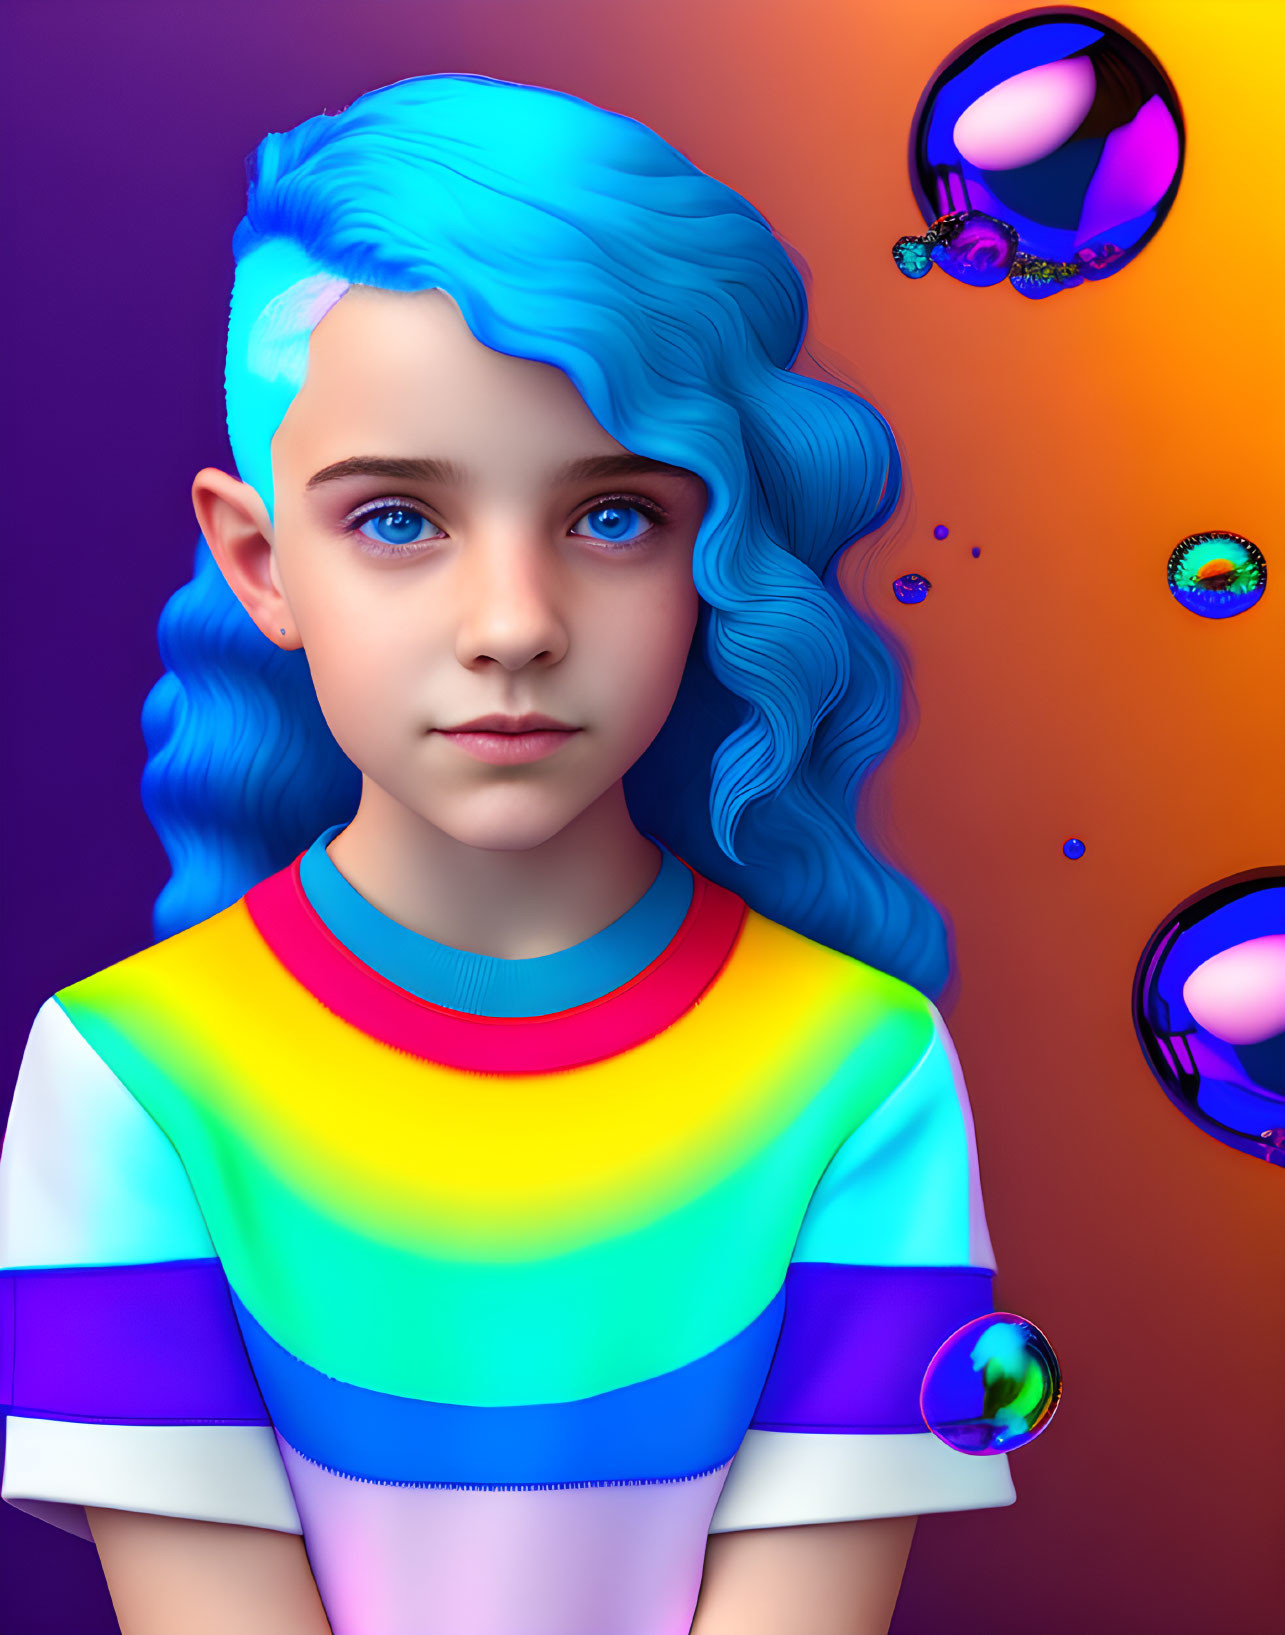 Child Digital Portrait: Blue Hair, Rainbow Shirt, Purple Background